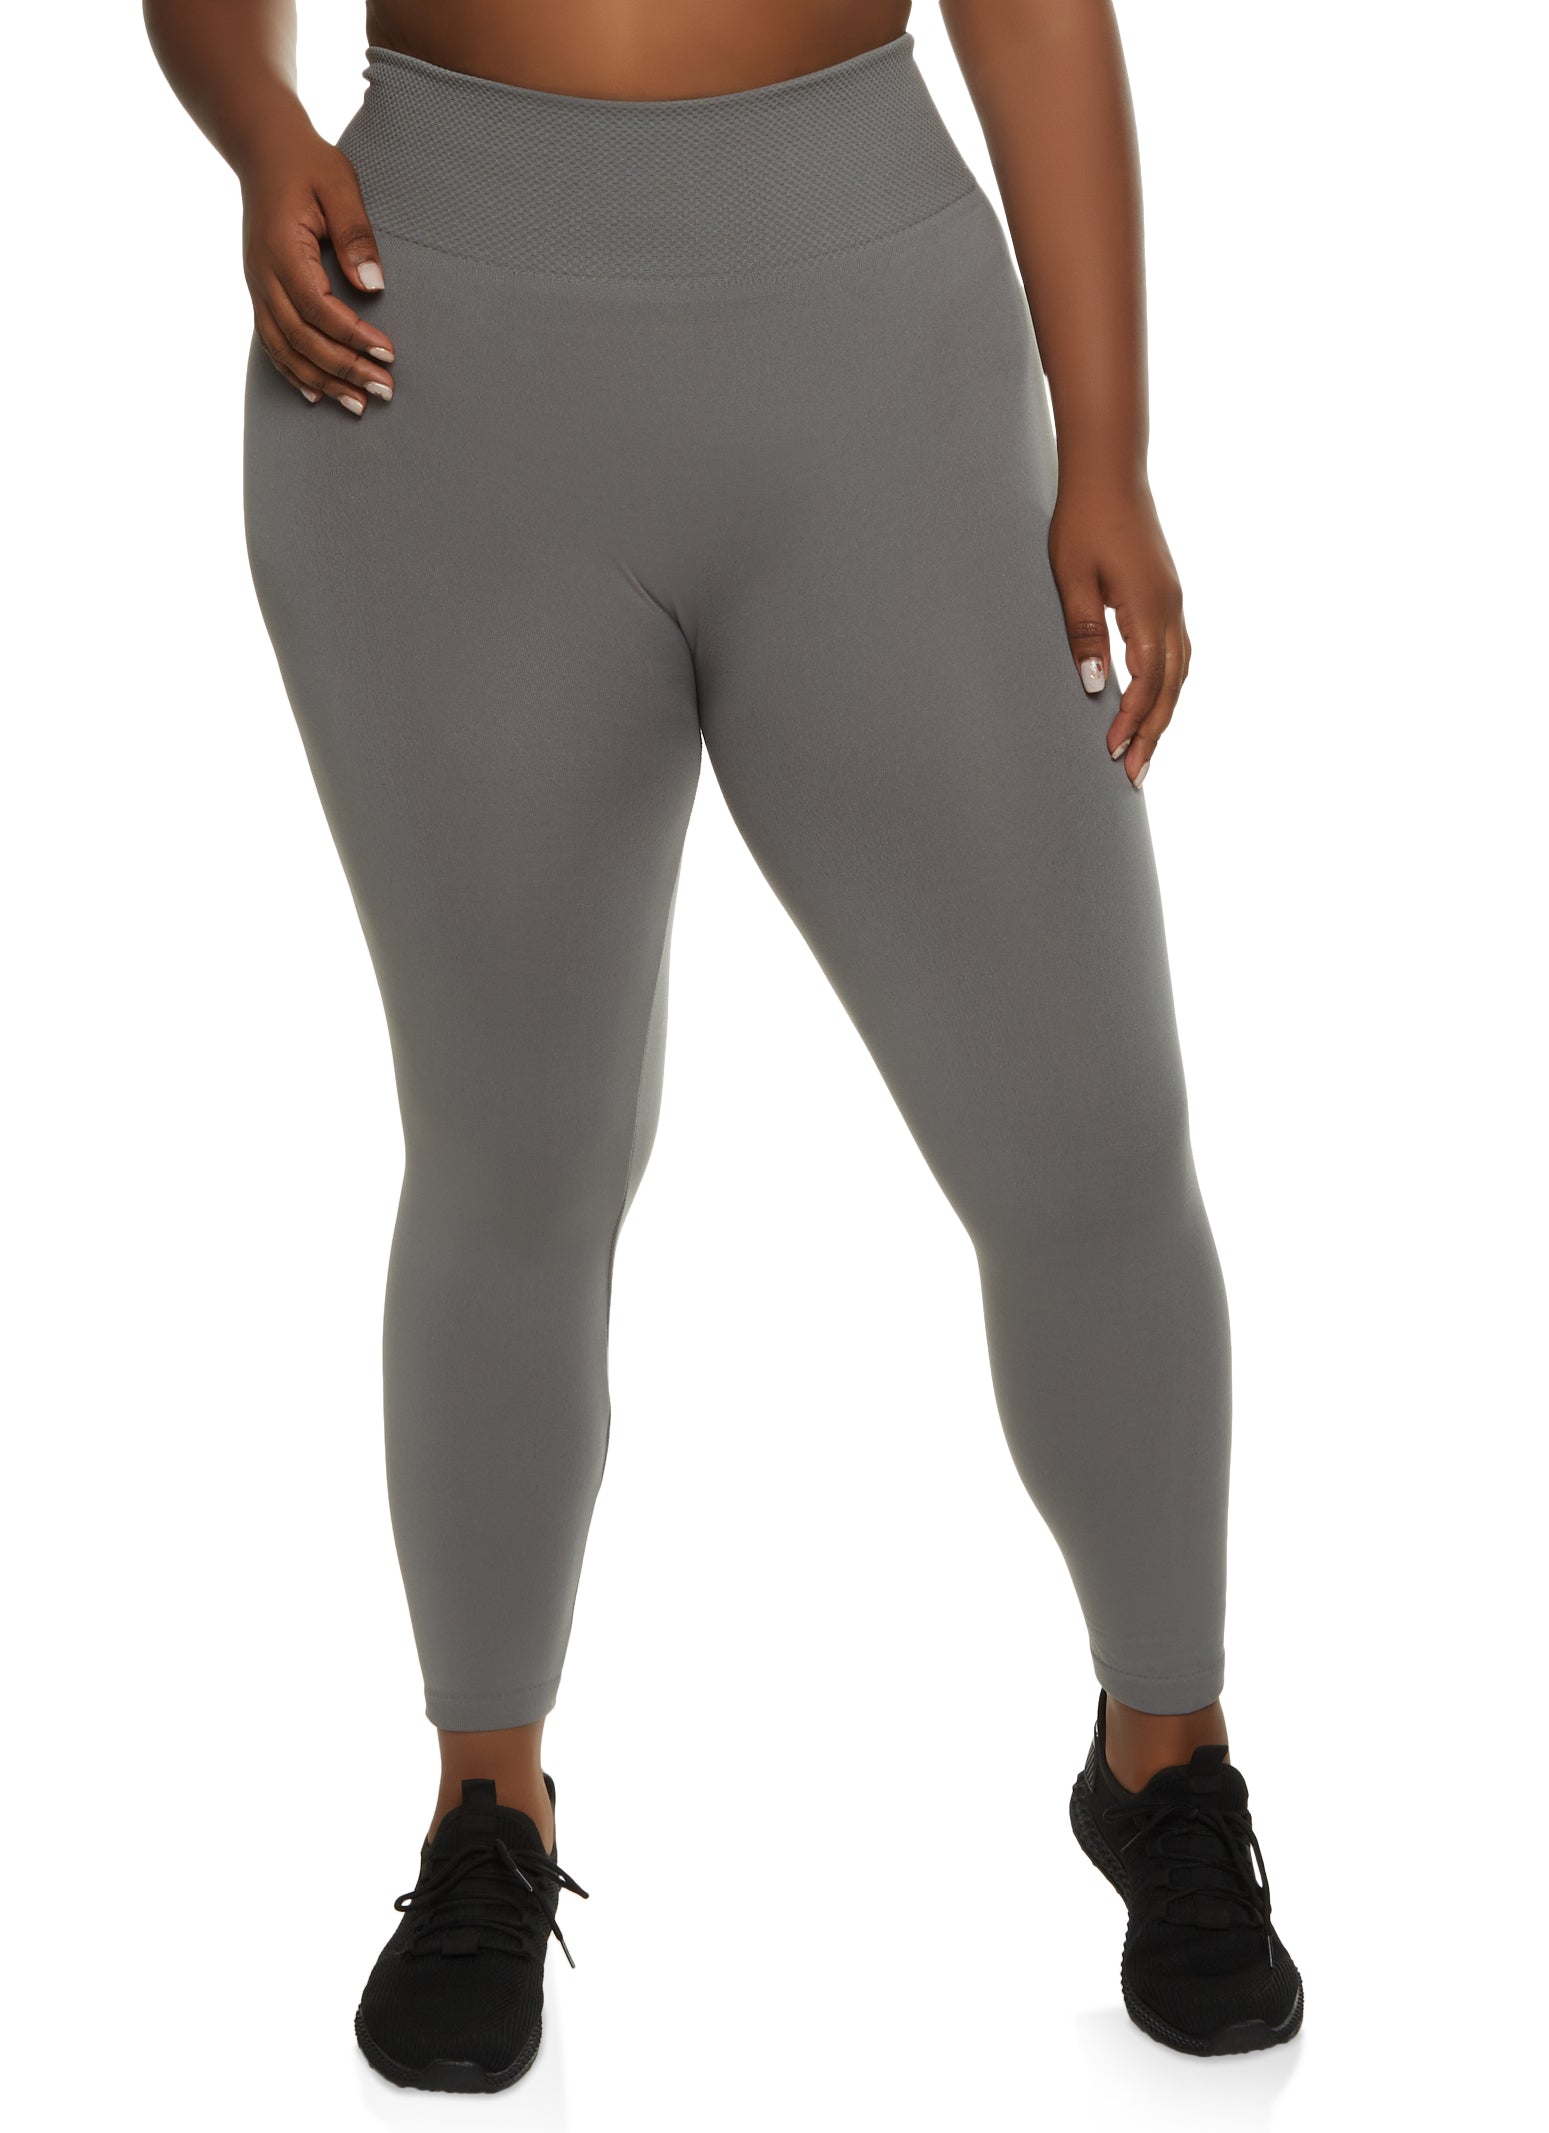 Active Club Fleece Lined Leggings for Women, Assorted XL/2XL 6-Pack -  Walmart.com